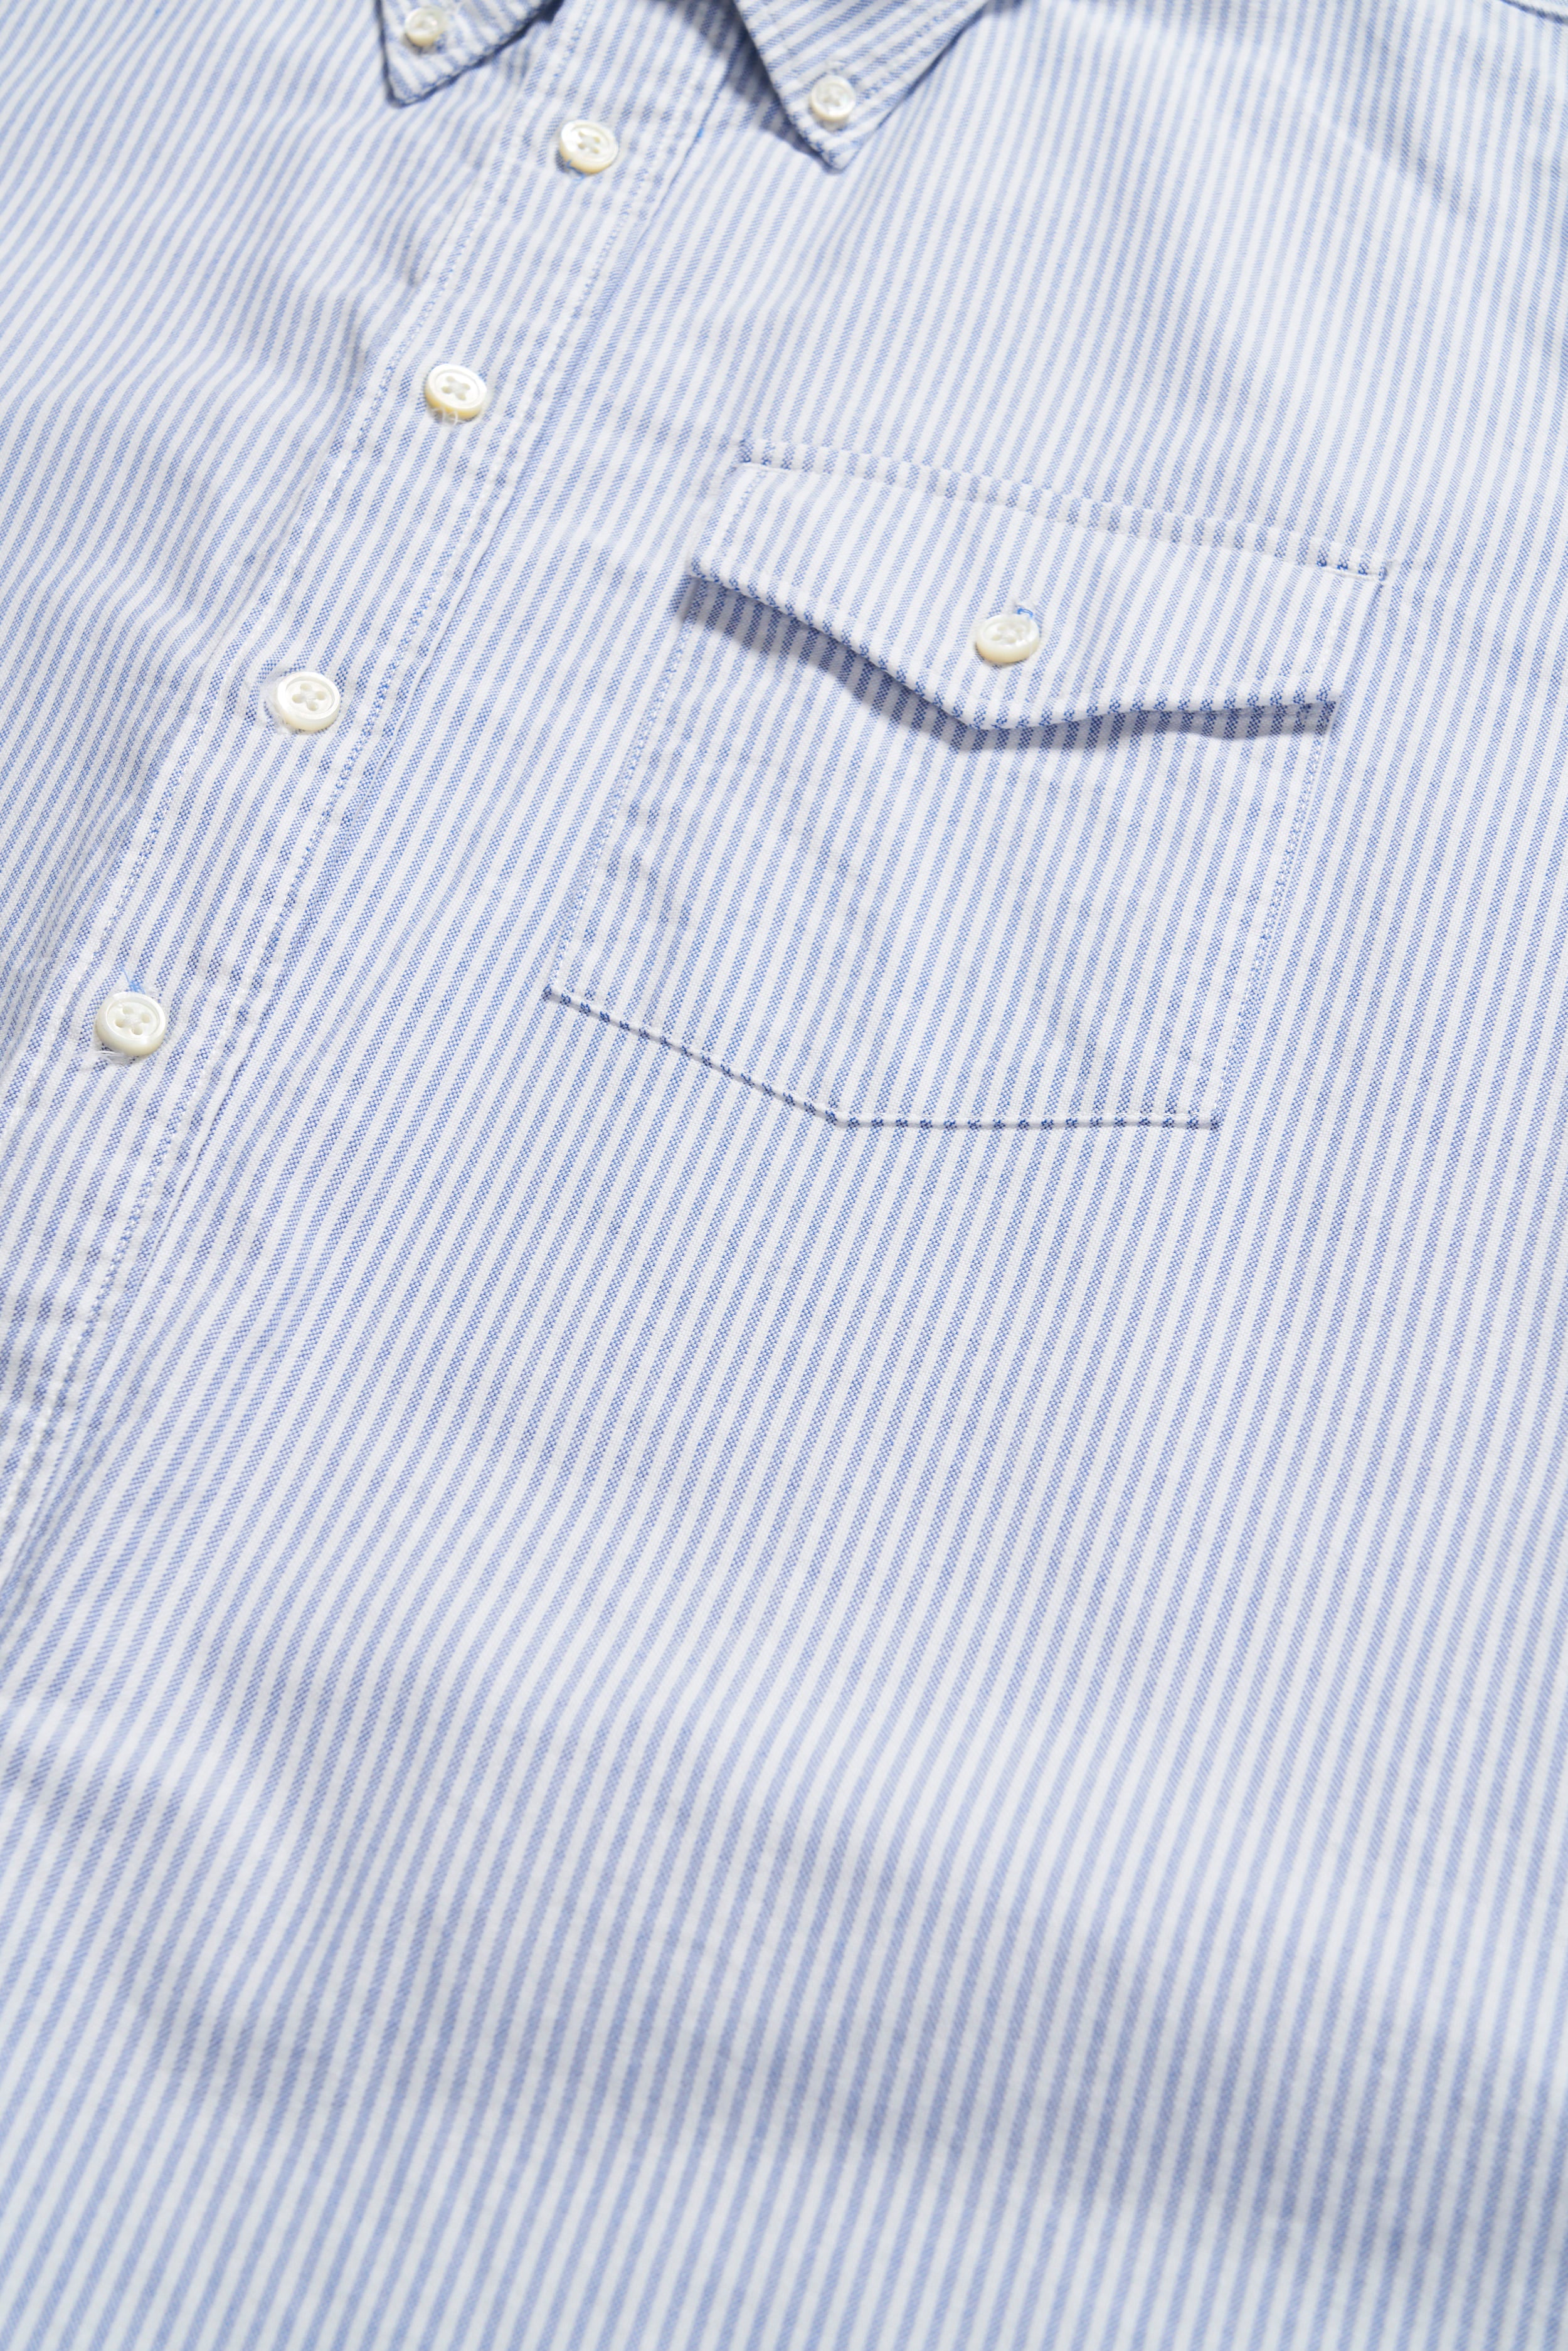 Engineered Garments IVY BD Shirt - Navy Candy Stripe Oxford